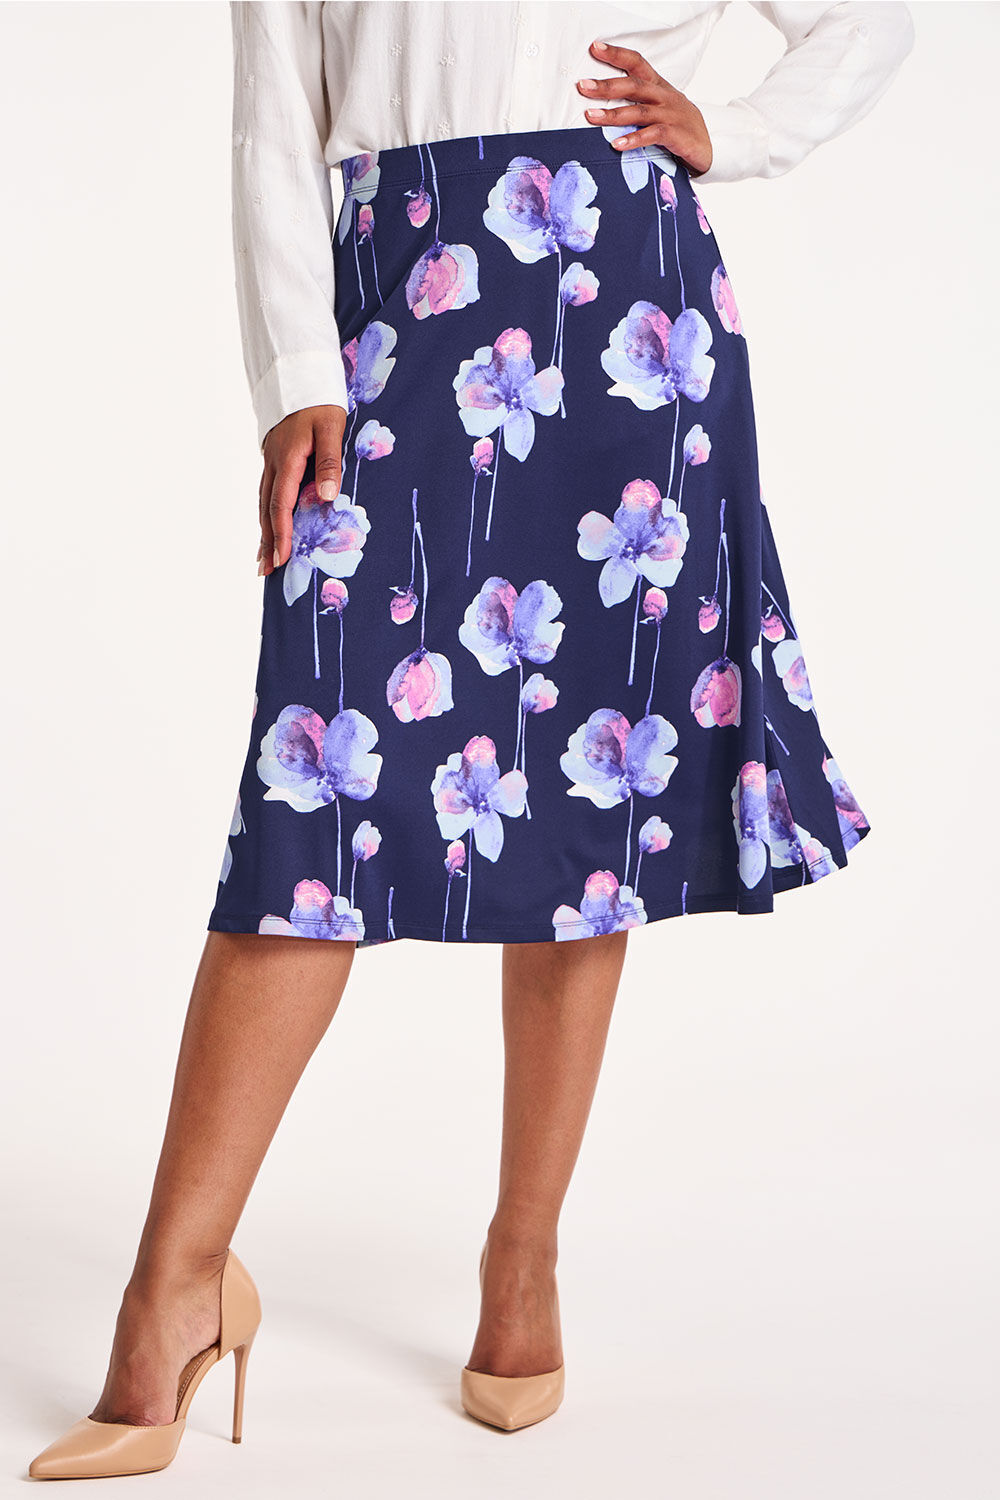 Bonmarche Navy Watercolour Floral Print Flippy Skirt, Size: 12